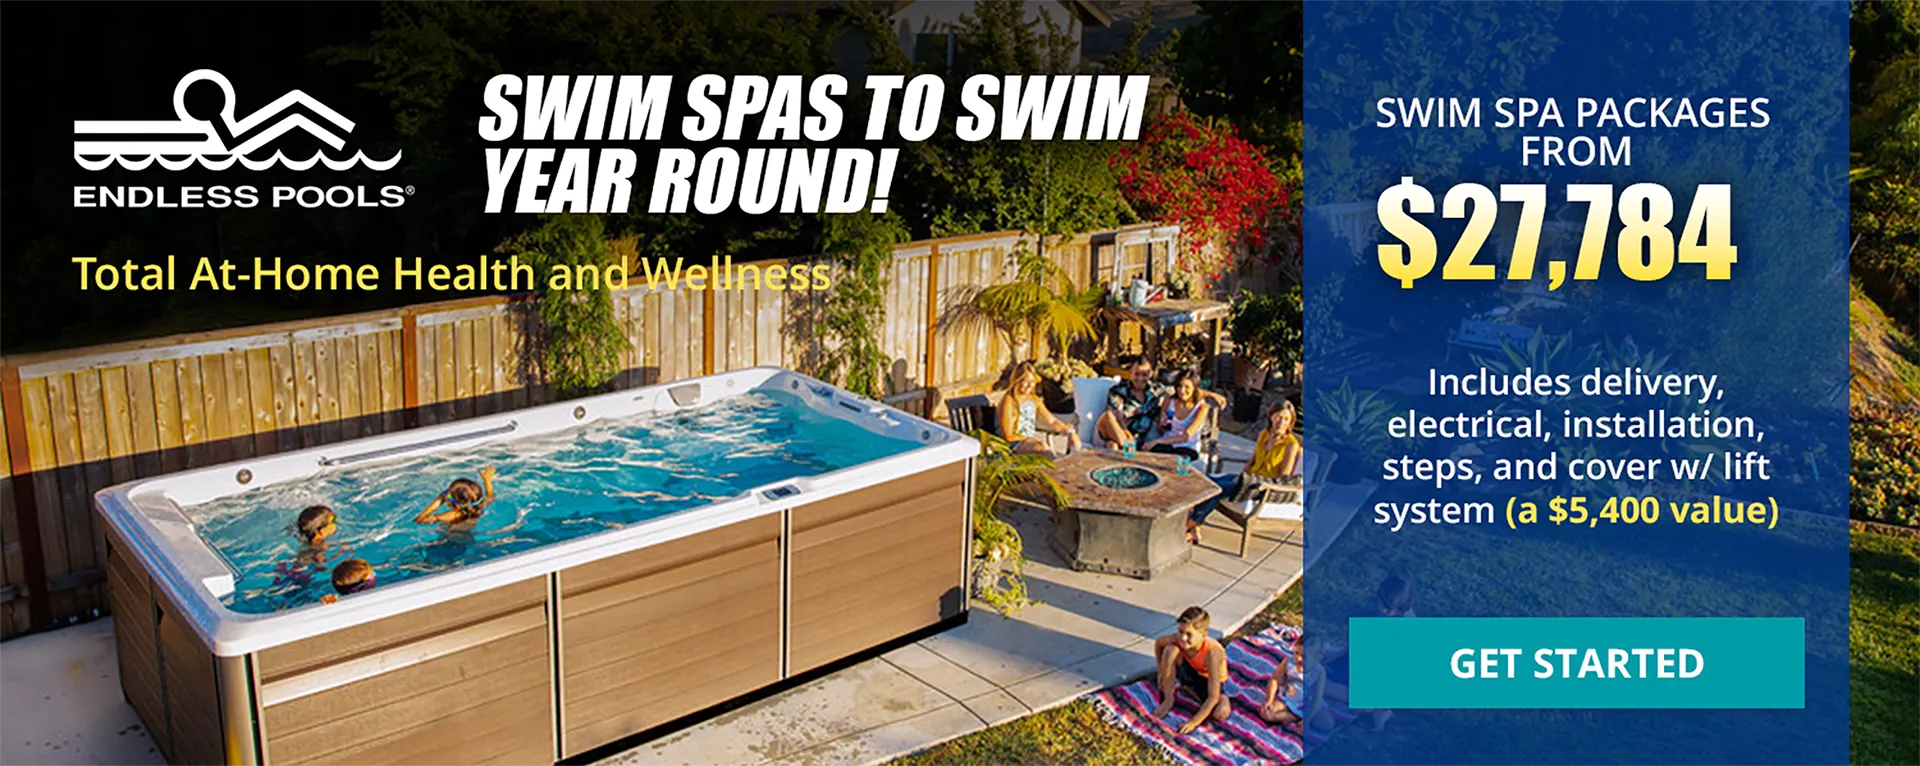 Swim Spas to Swim Year Round!